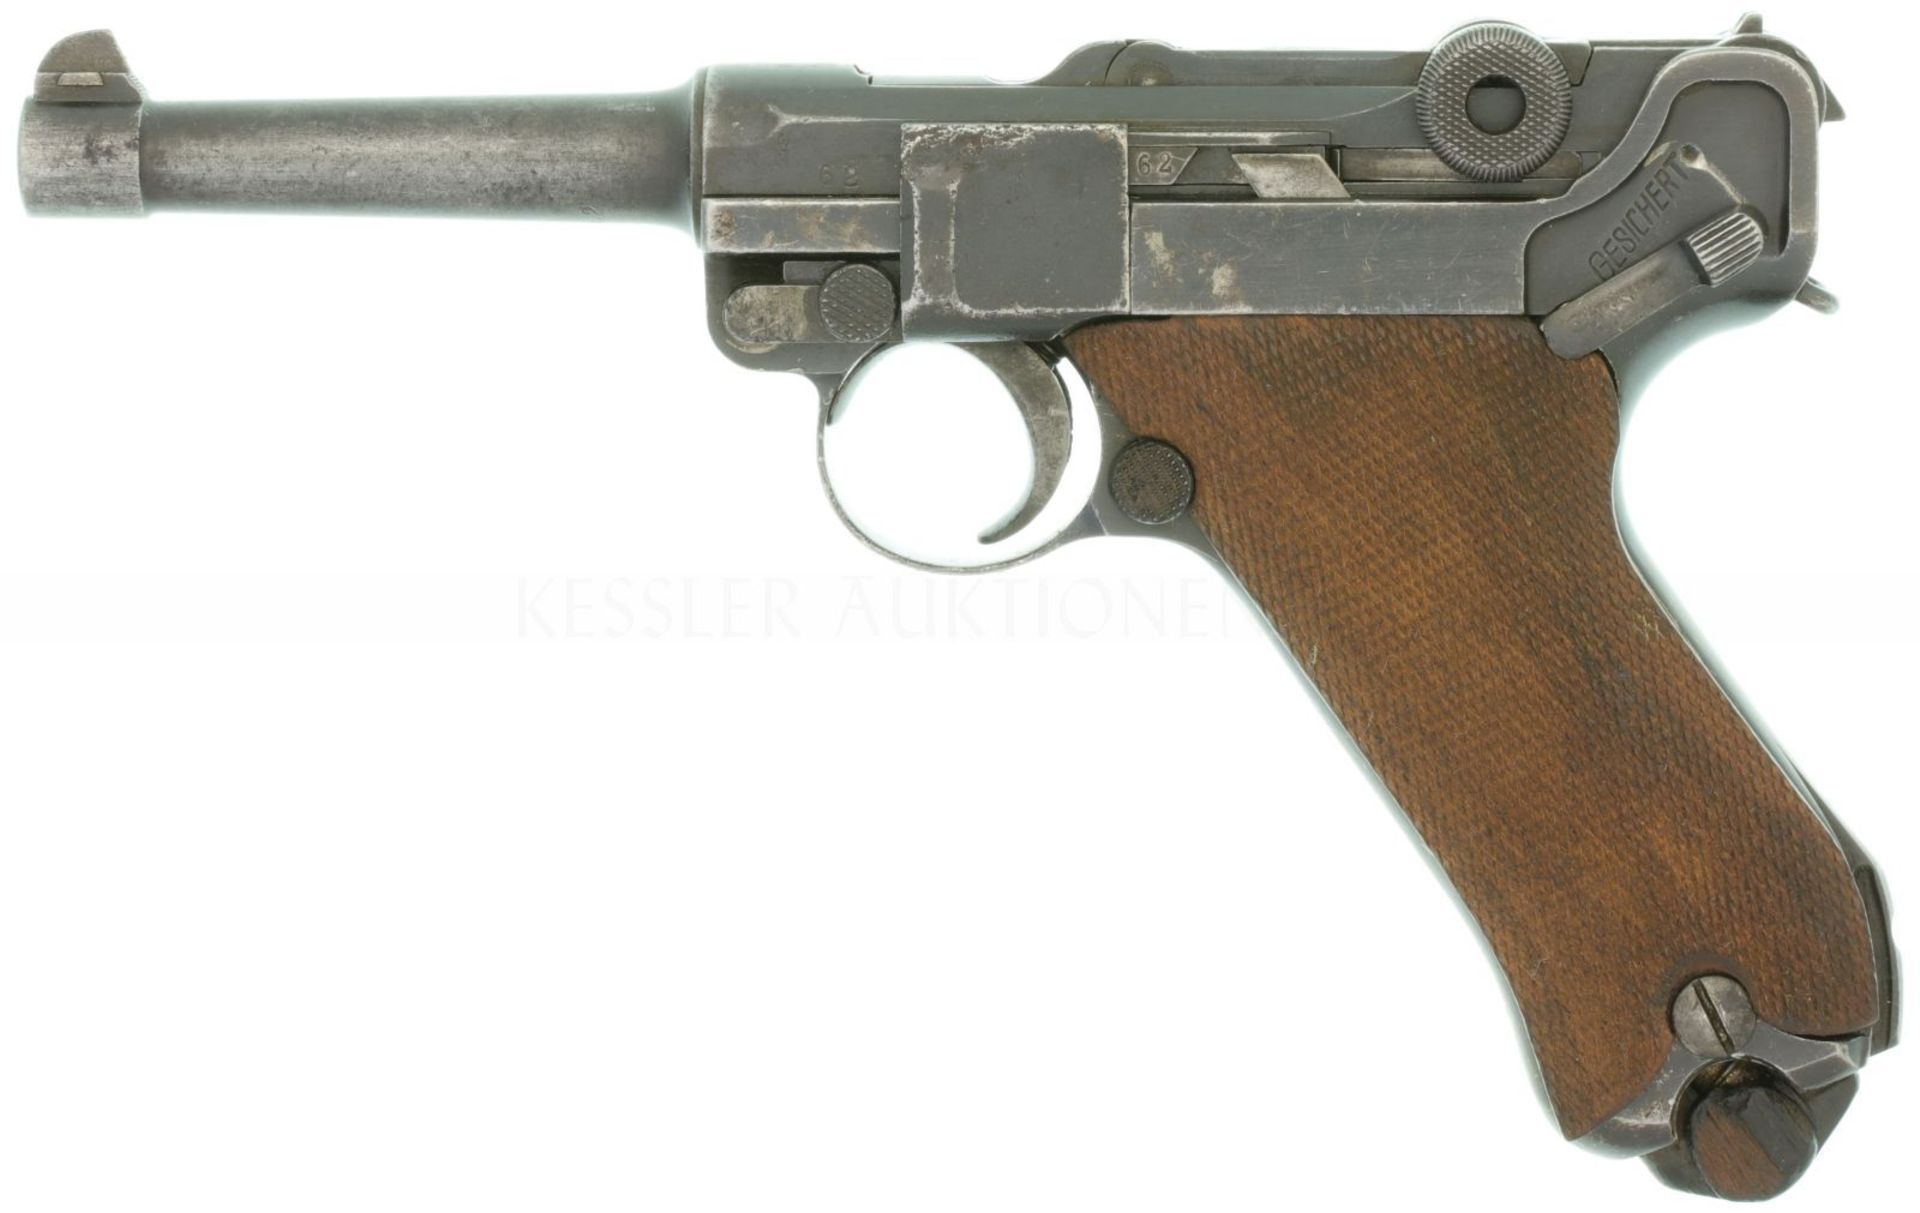 Pistole, DWM Parabellum, Mod. 08, Commercial, Kal. 9mmP